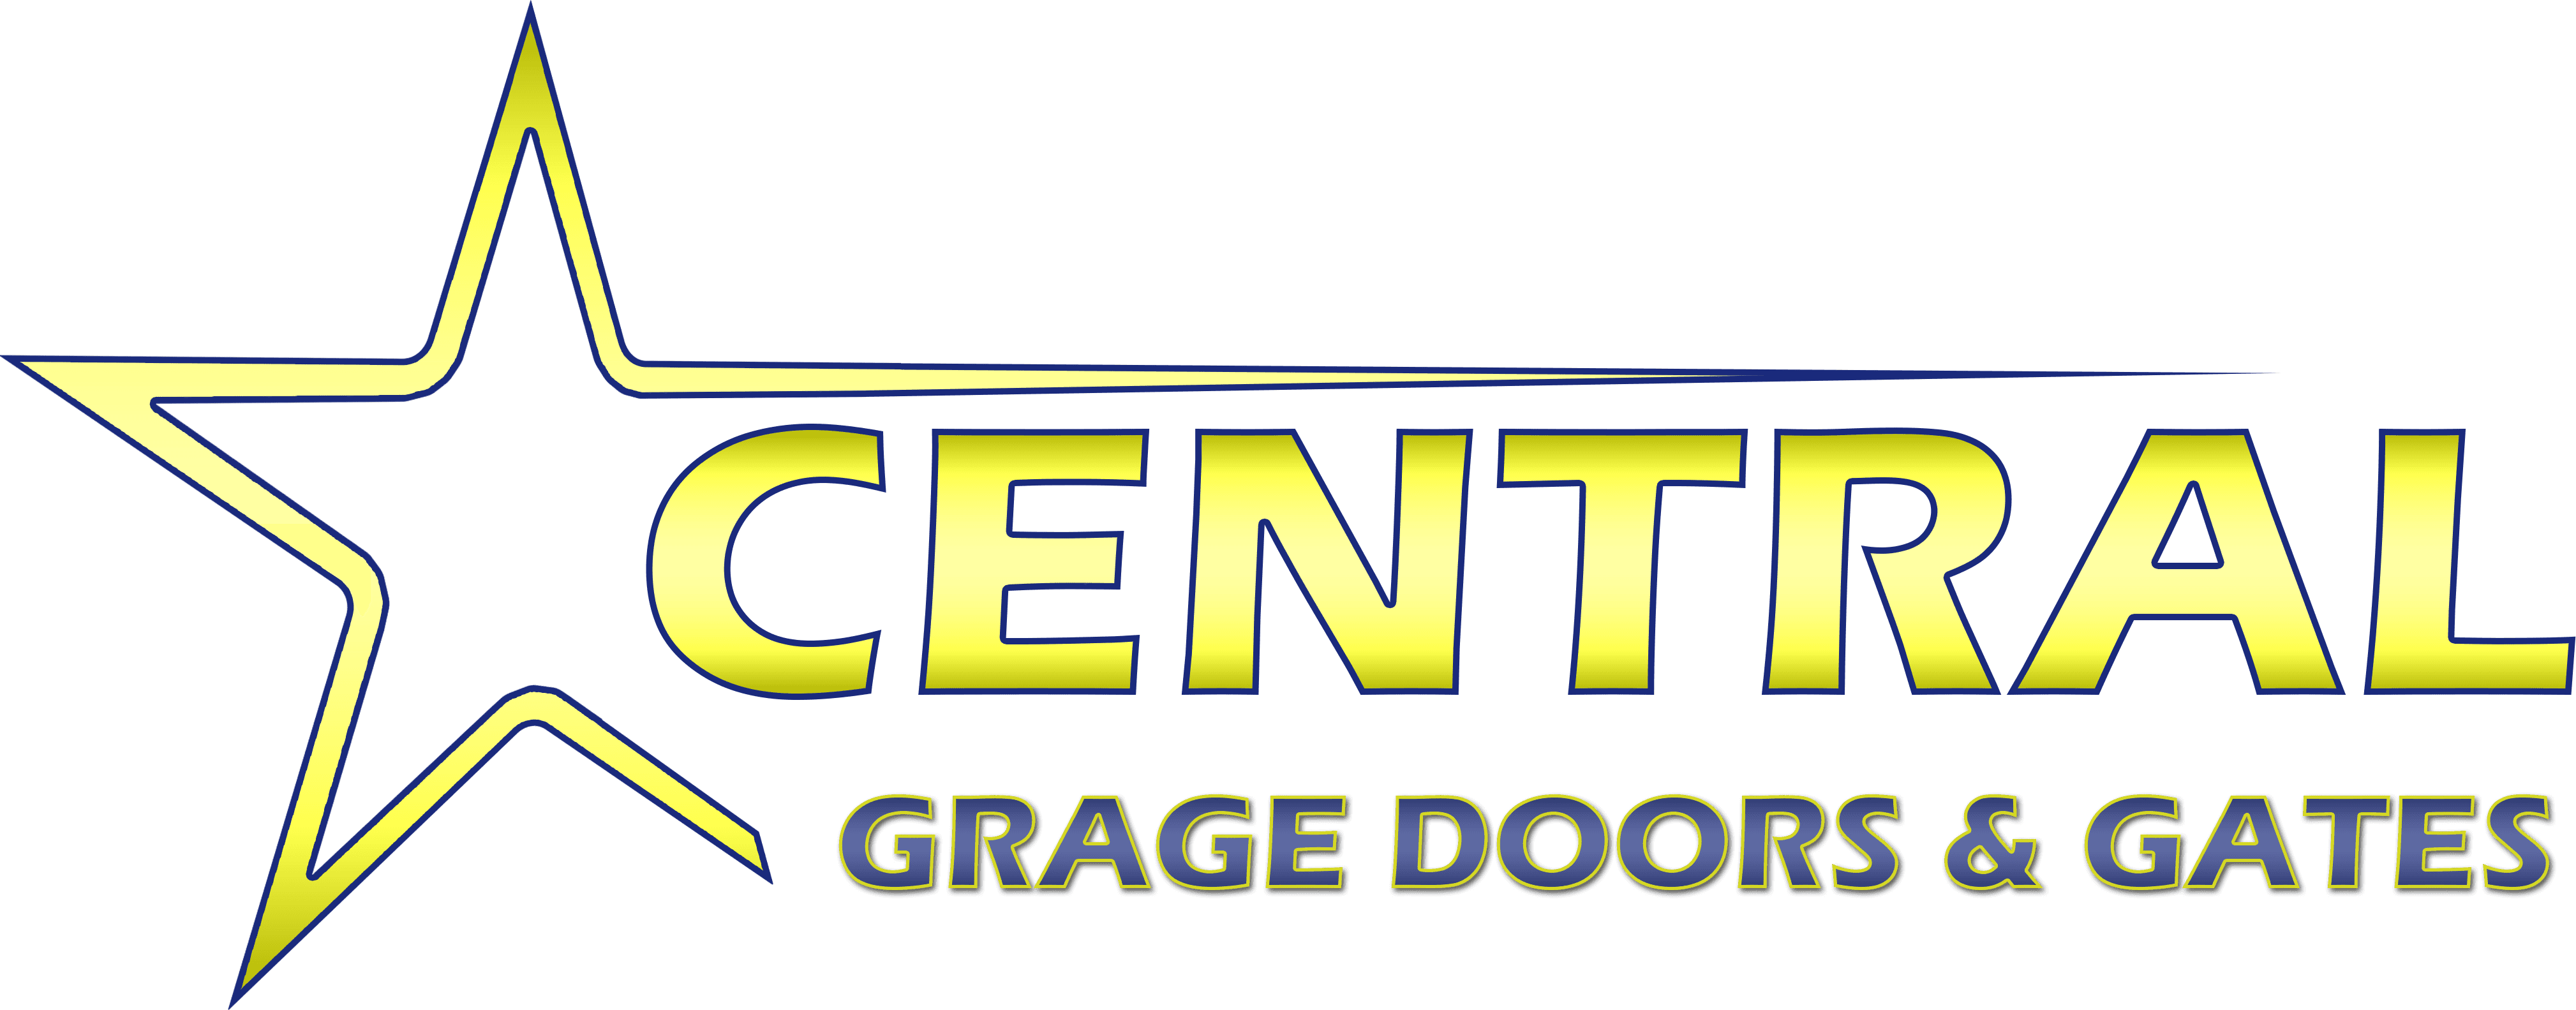 Central Garage Doors & Gates